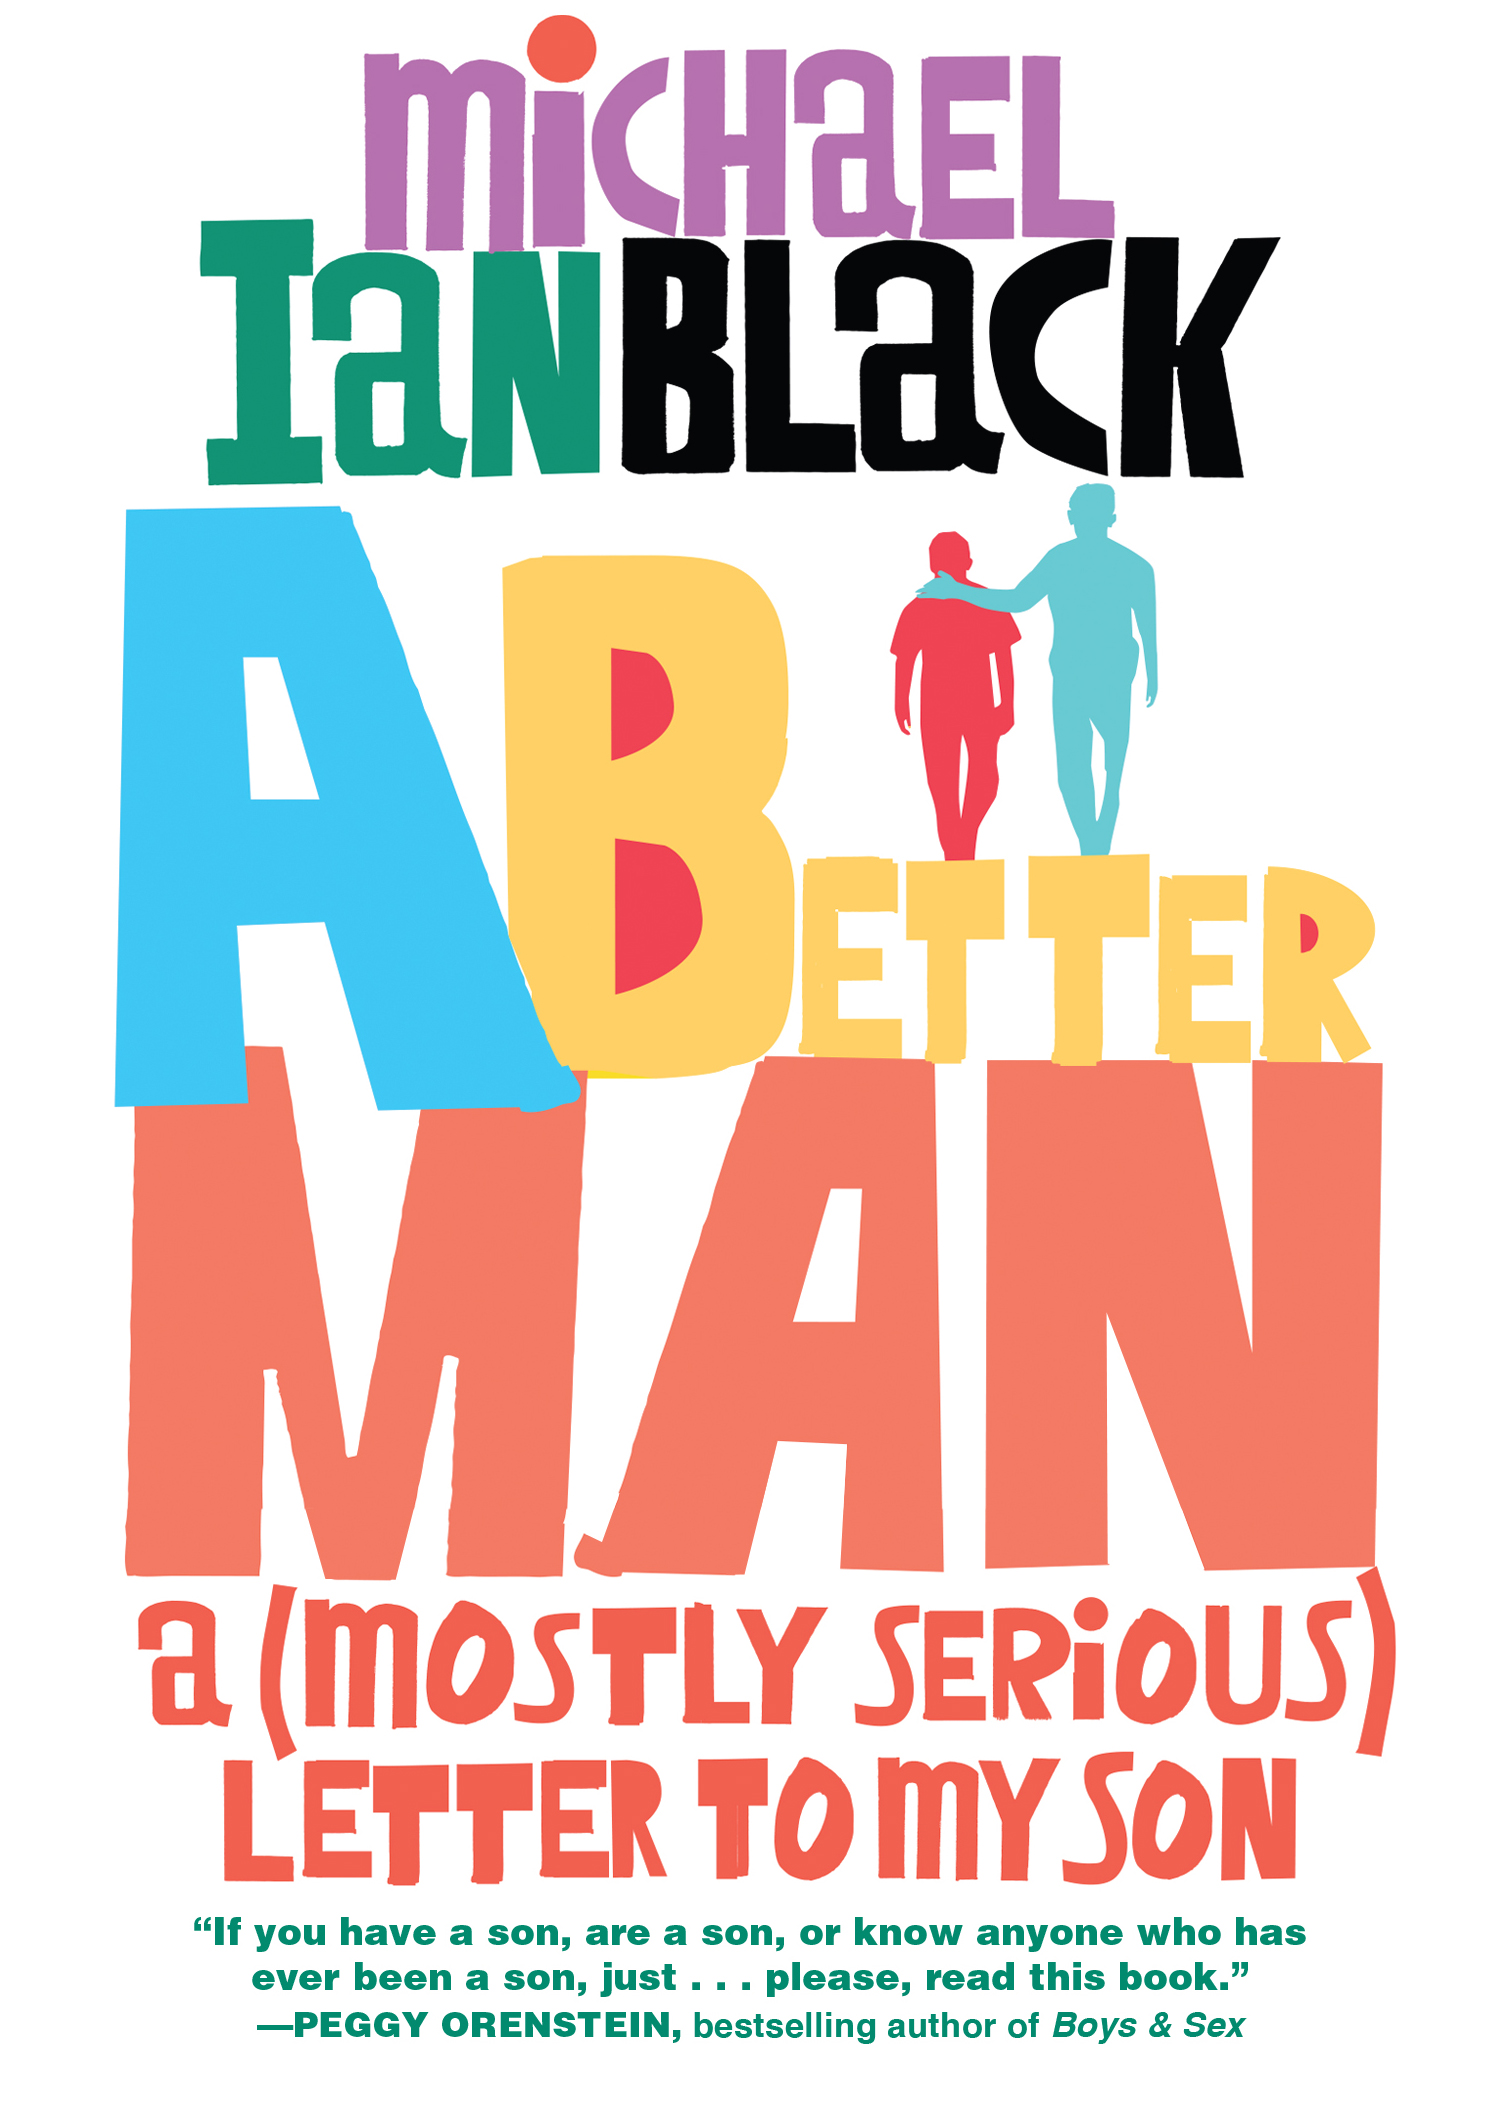 A Better Man by Michael Ian Black | Hachette Book Group